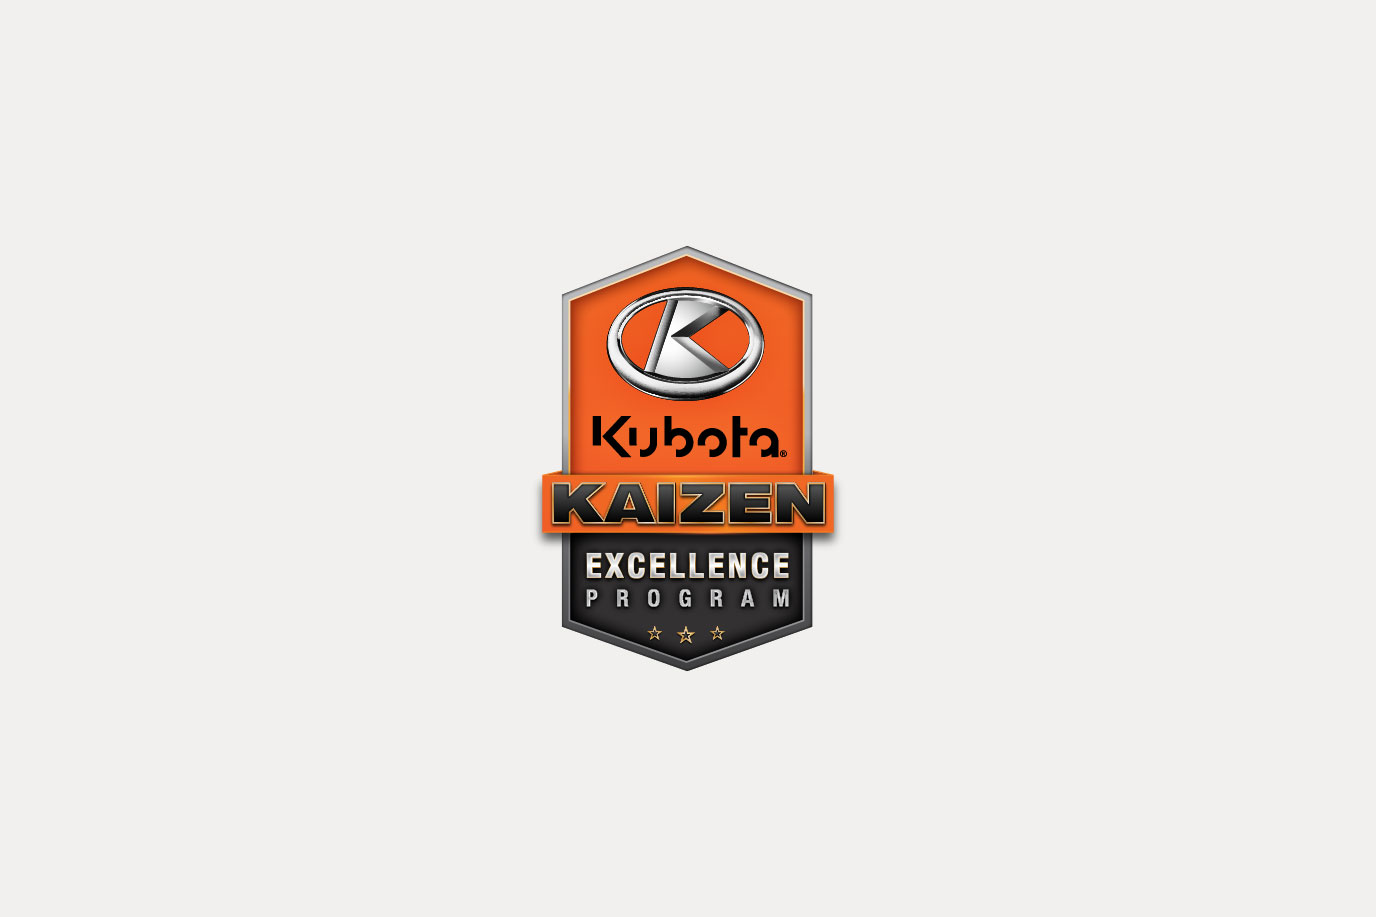 Kubota Kaizen Excellence Program primary identity